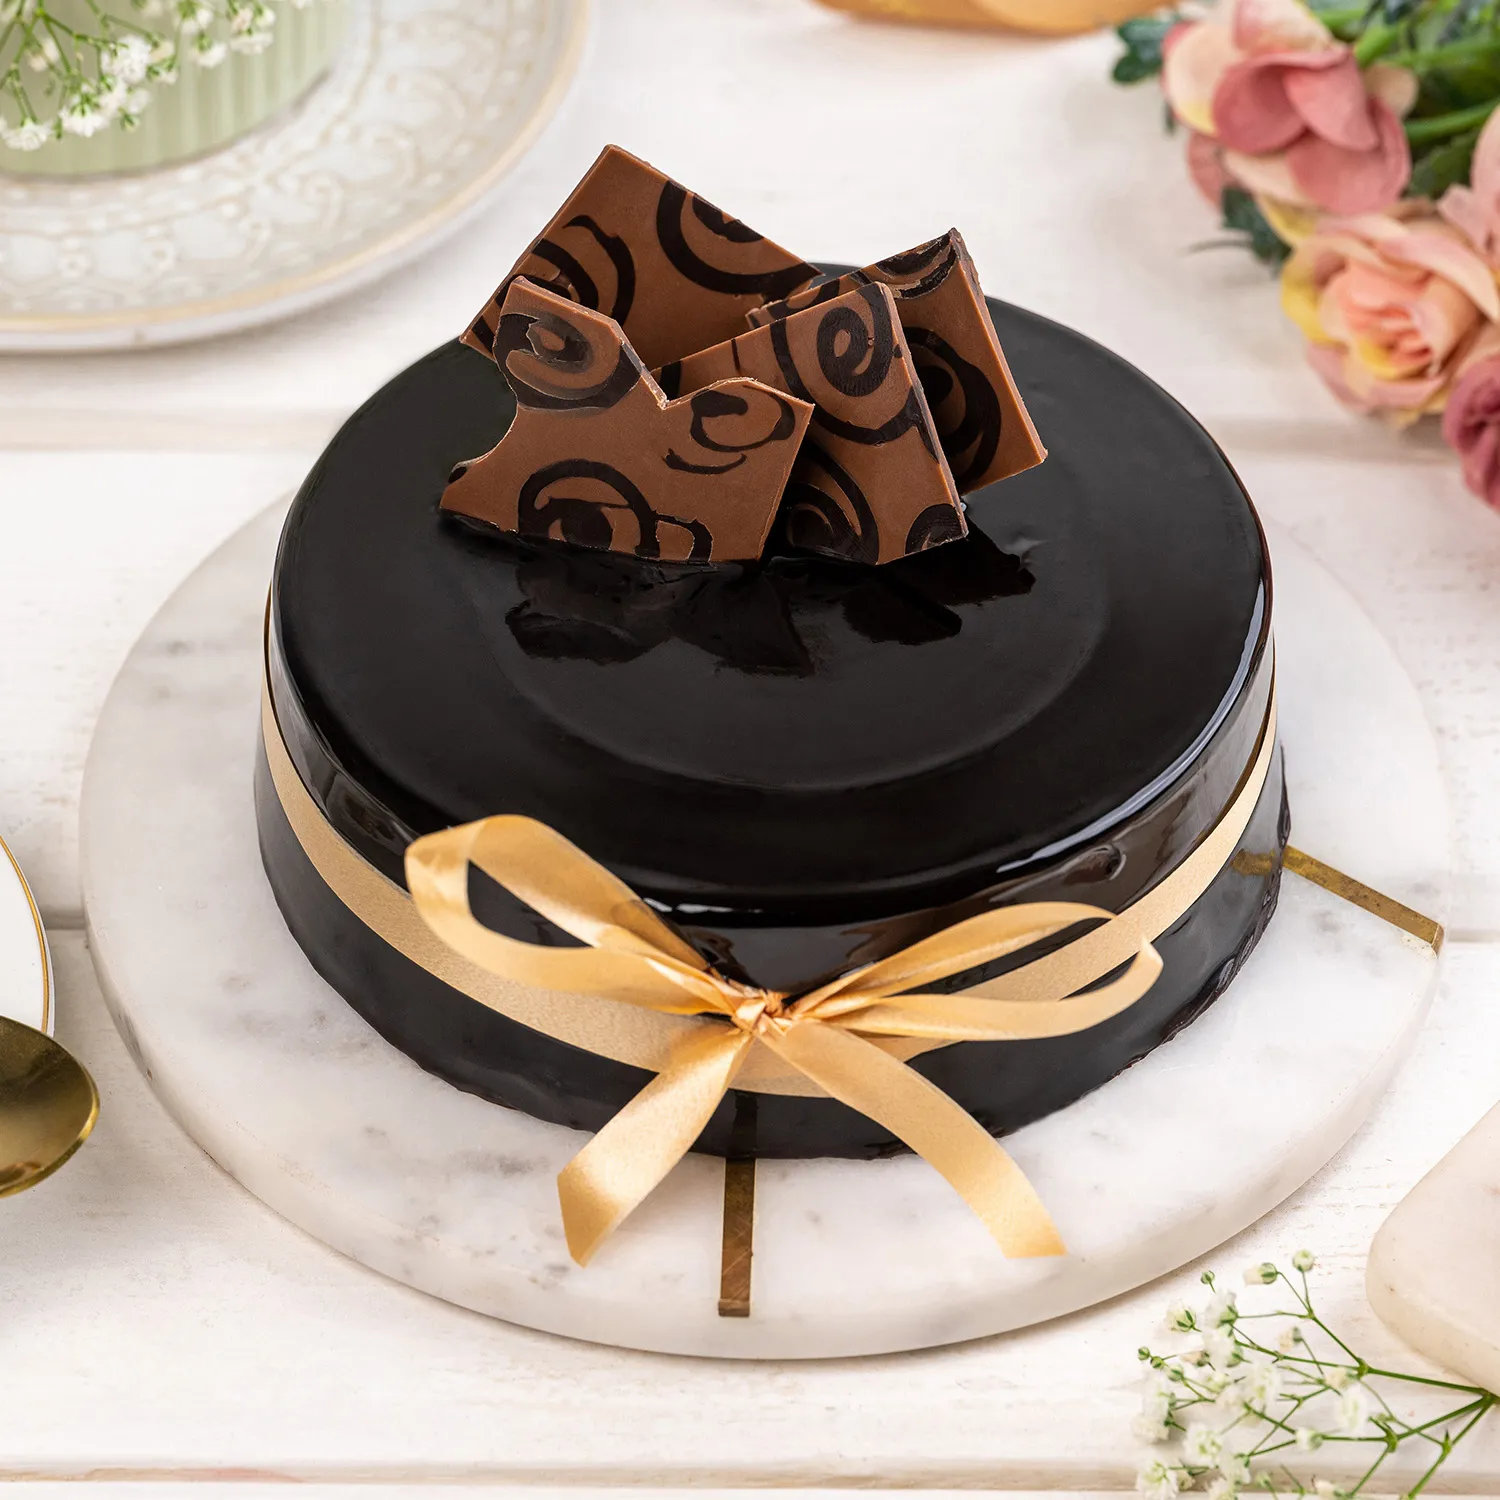 Decorated Chocolate Truffle Cake - 2 KG